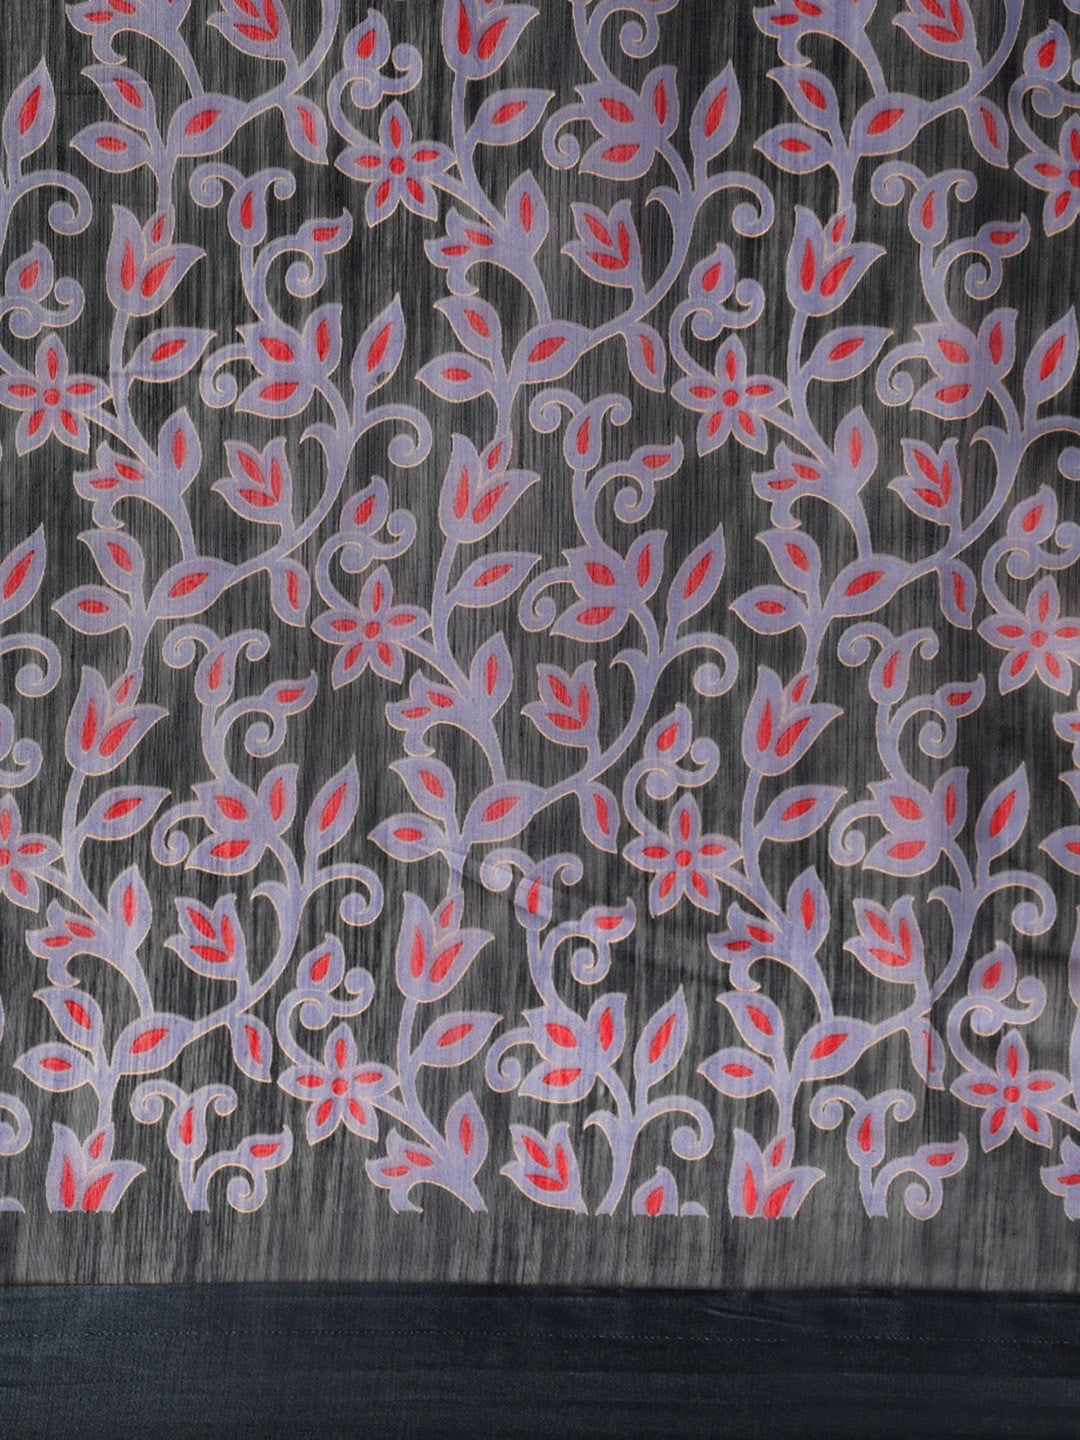 Women's Grey Art Silk Printed Saree - Ahika